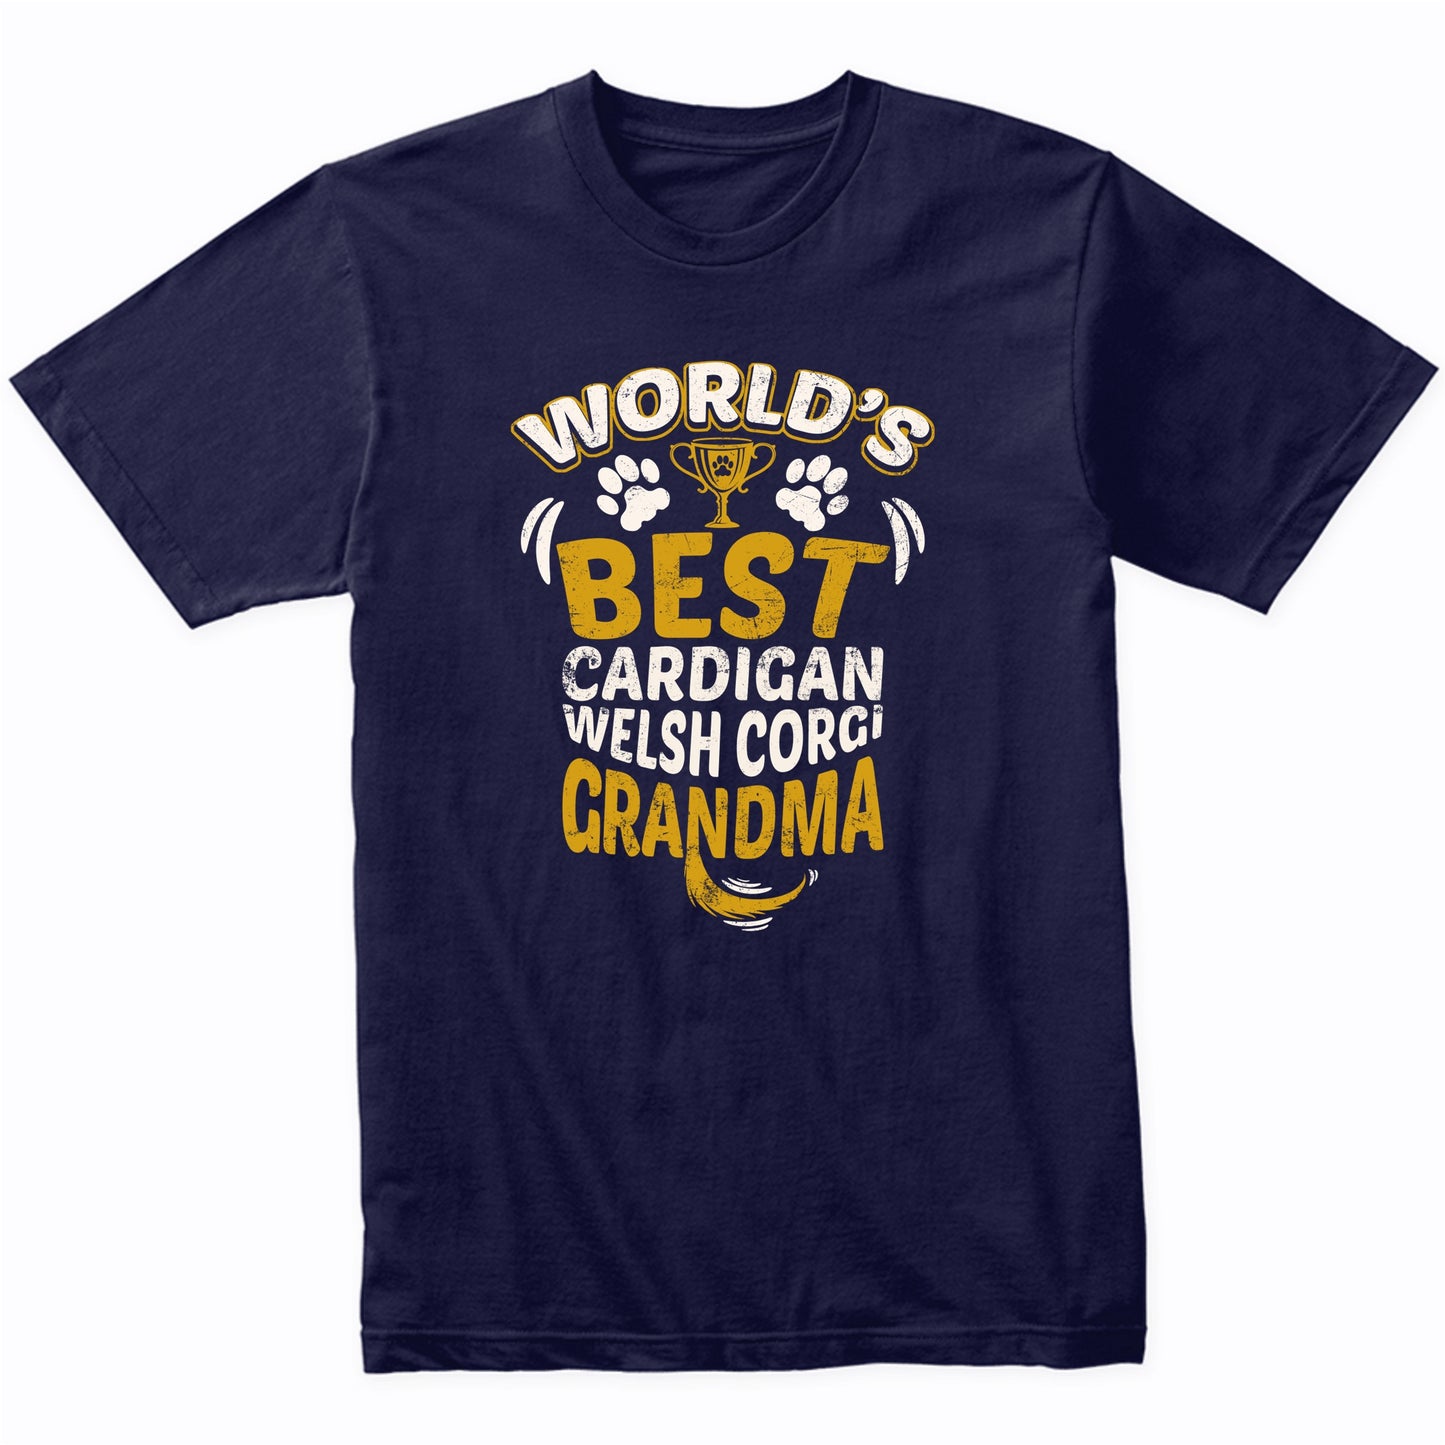 World's Best Cardigan Welsh Corgi Grandma Graphic T-Shirt